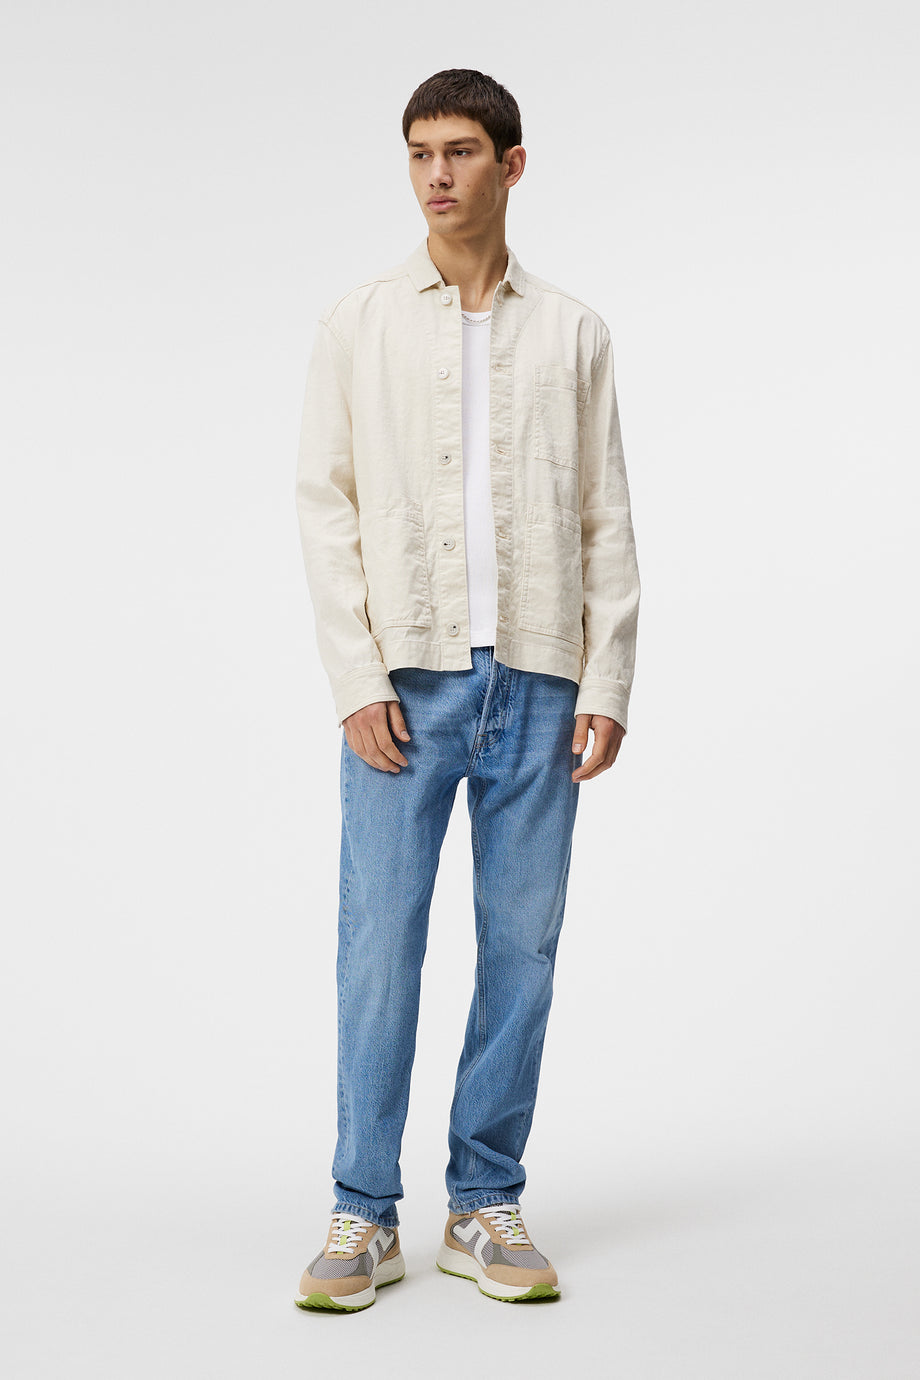 Errol Linen workwear overshirt / Moonbeam